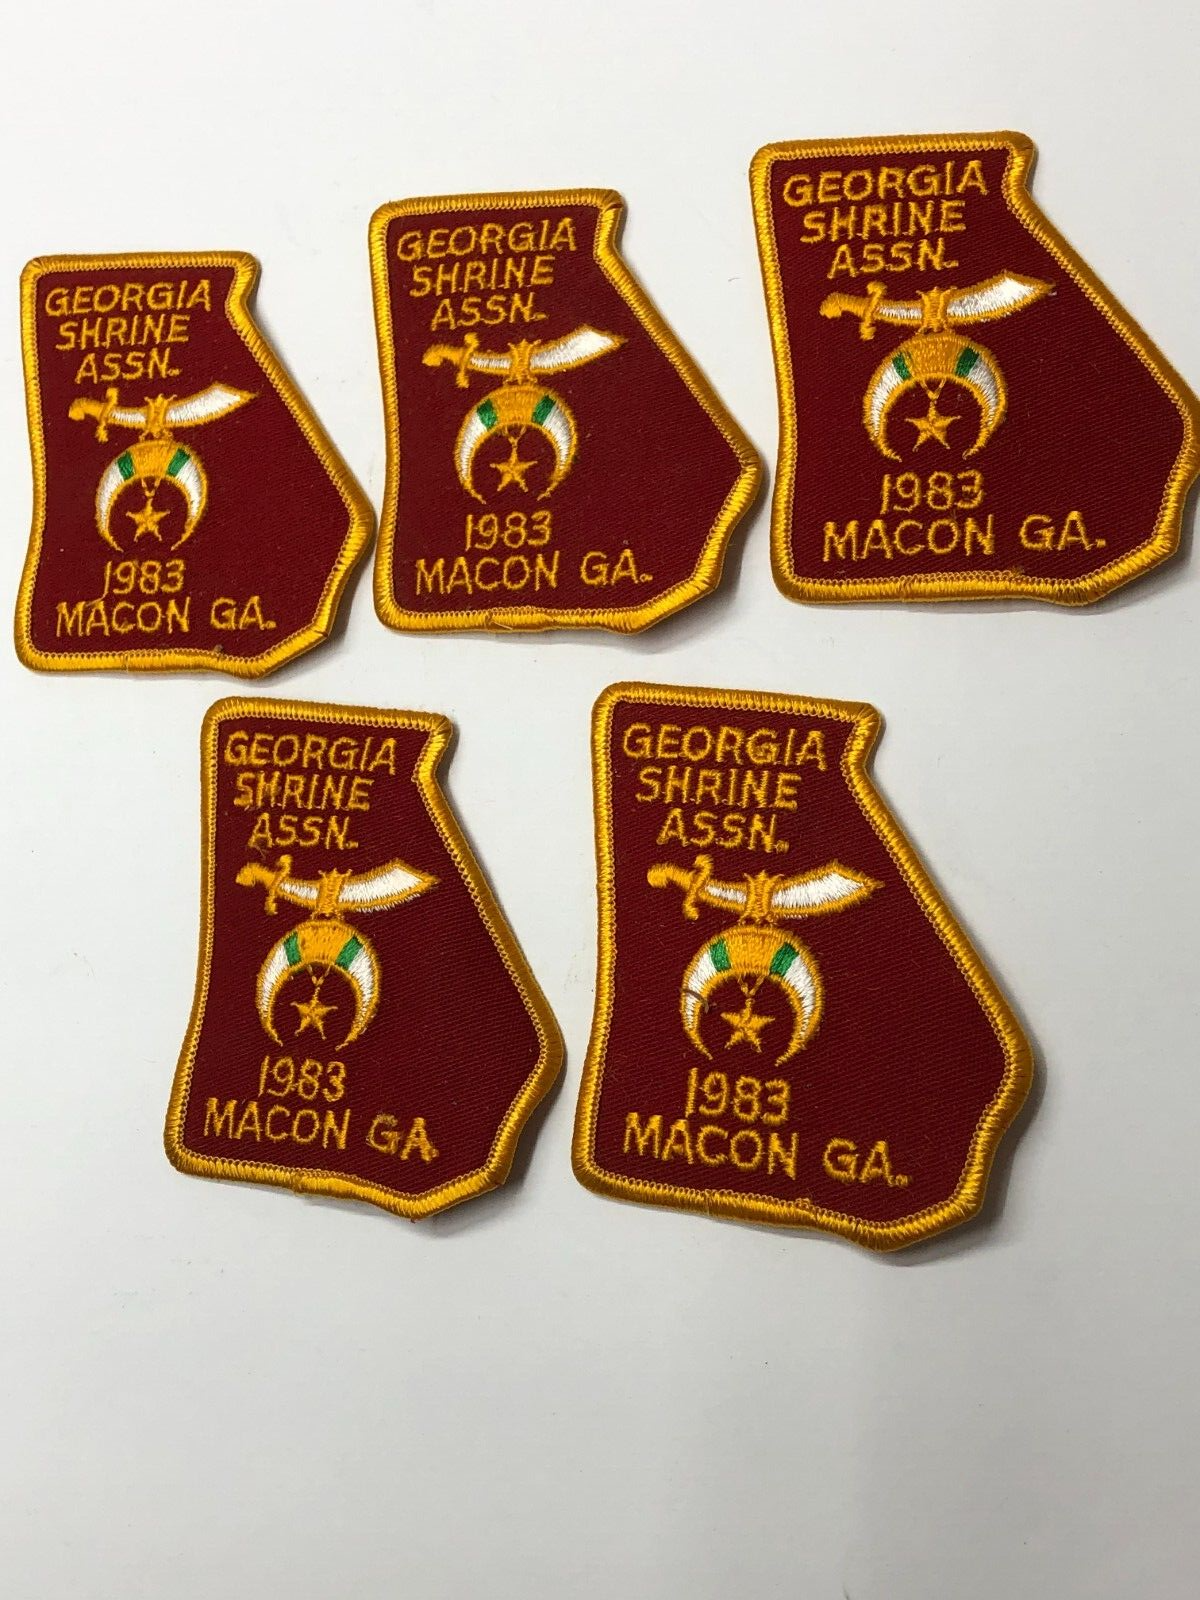 Georgia Shrine Assn. 1983 Macon, GA New Old Stock Patches Без бренда